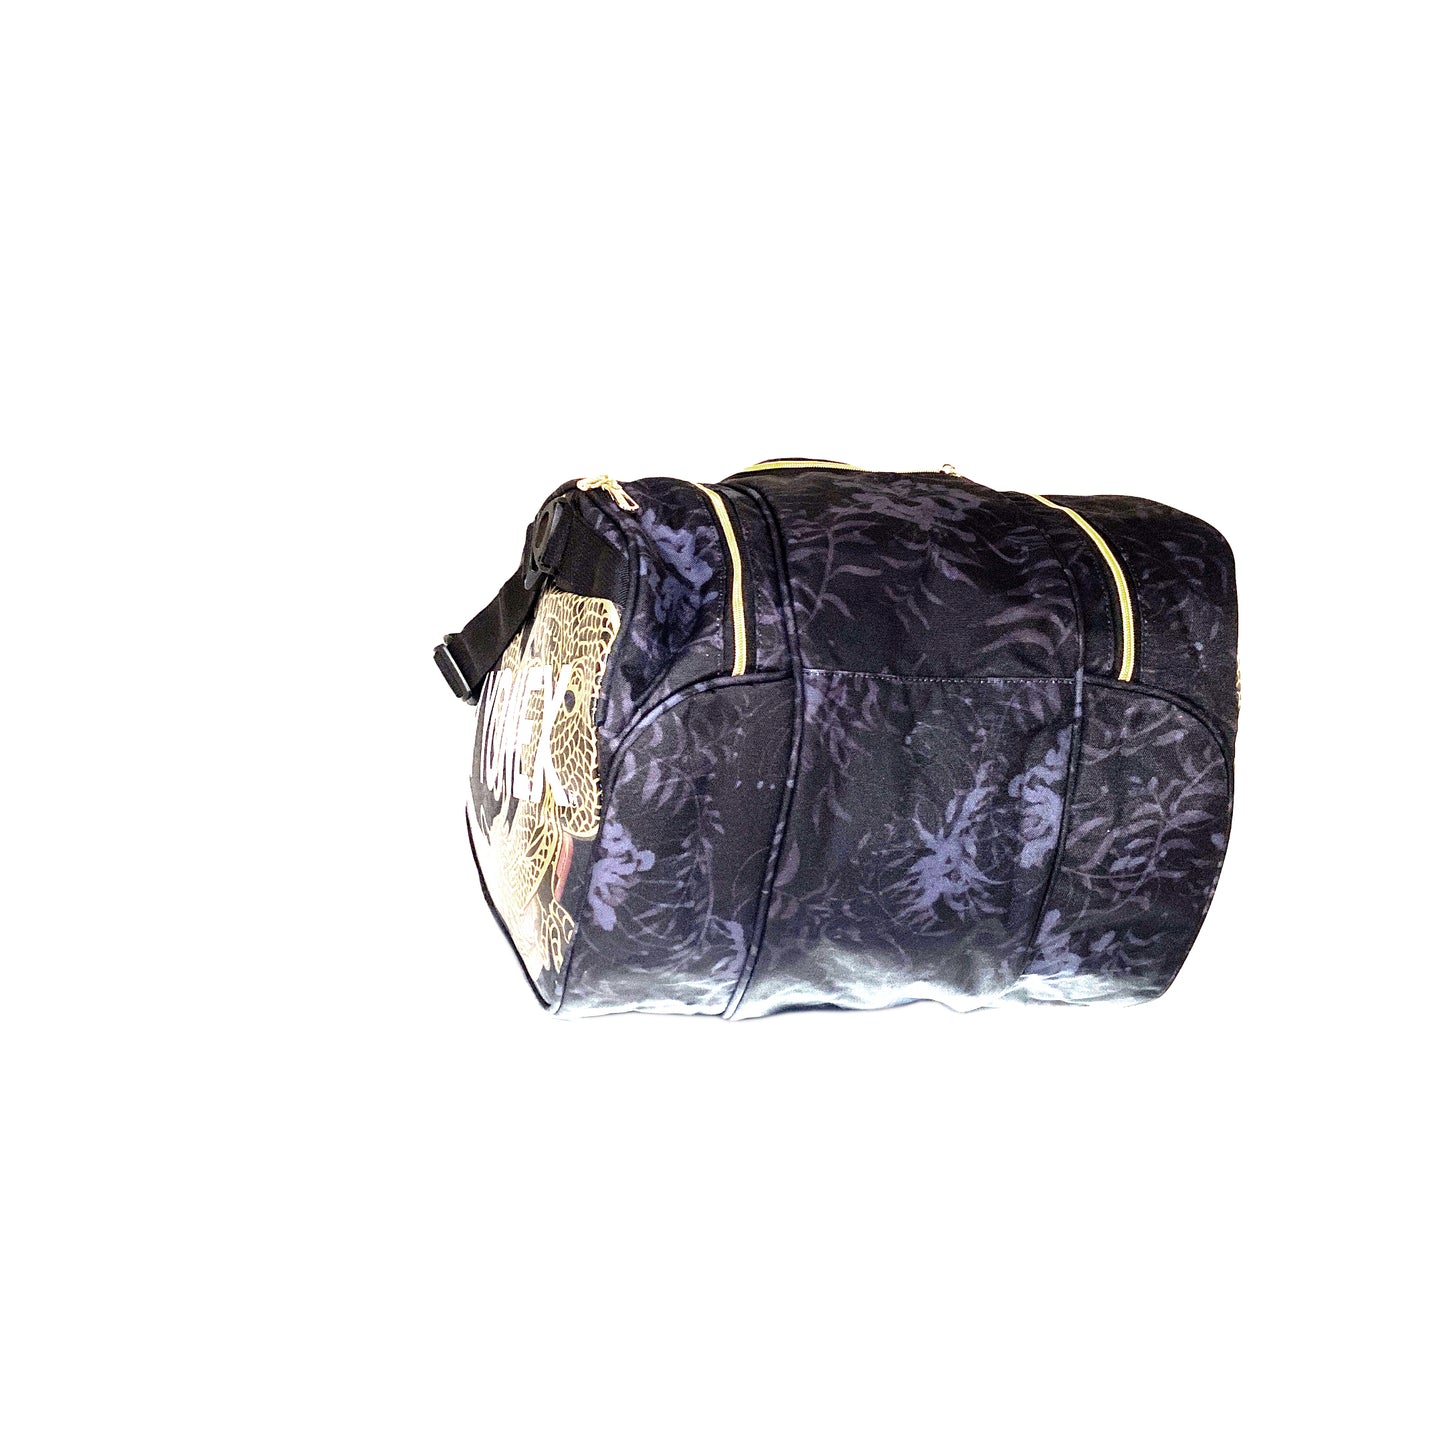 Yonex 9pk Osaka Pro Racquet Bag BAGN929 Gold/Purple